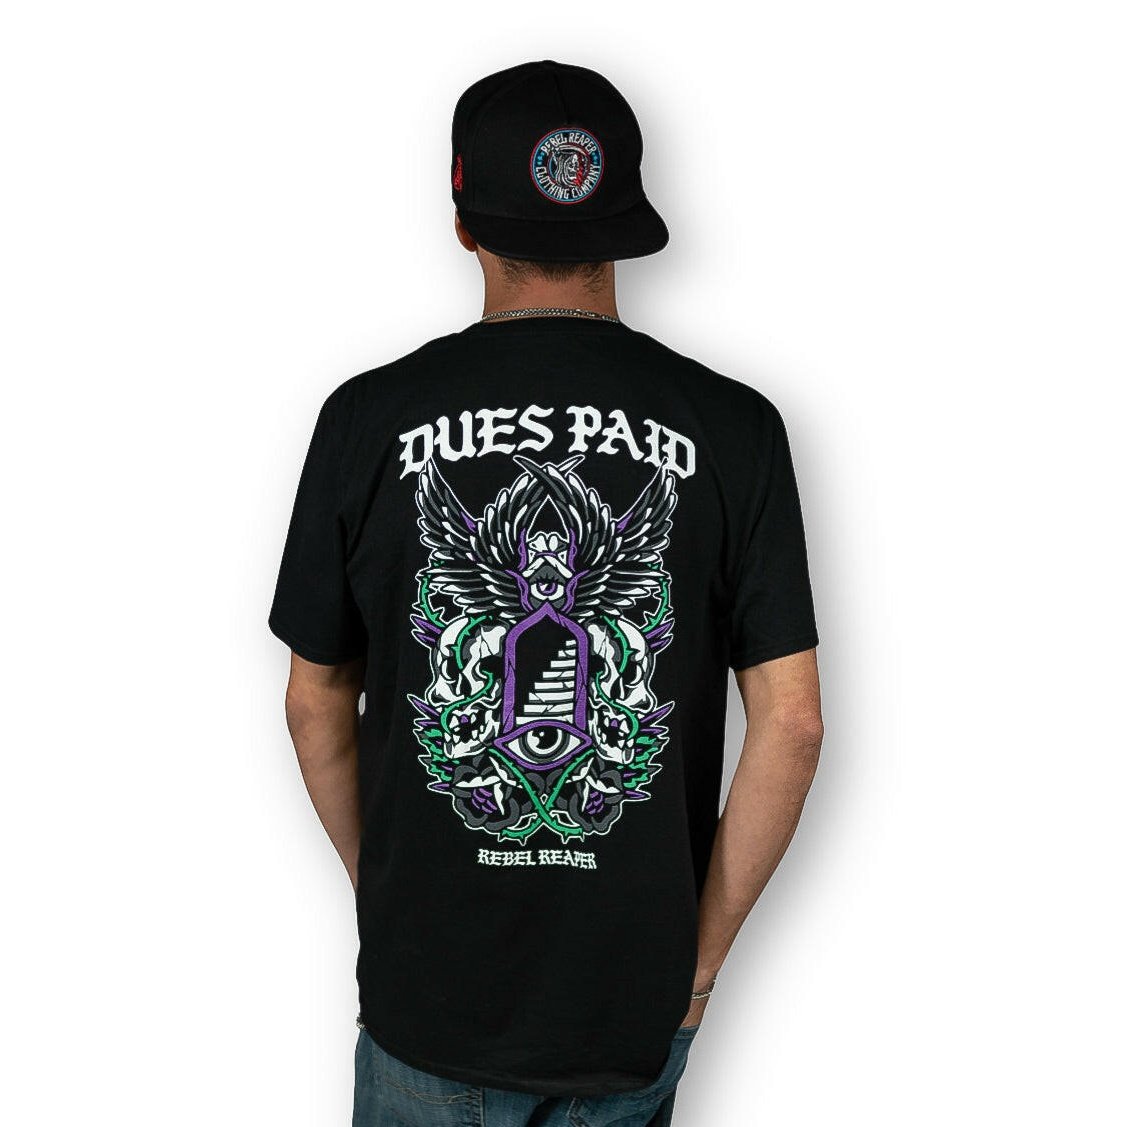 Dues Paid Black T-Shirt - Rebel Reaper Clothing Company T-Shirt